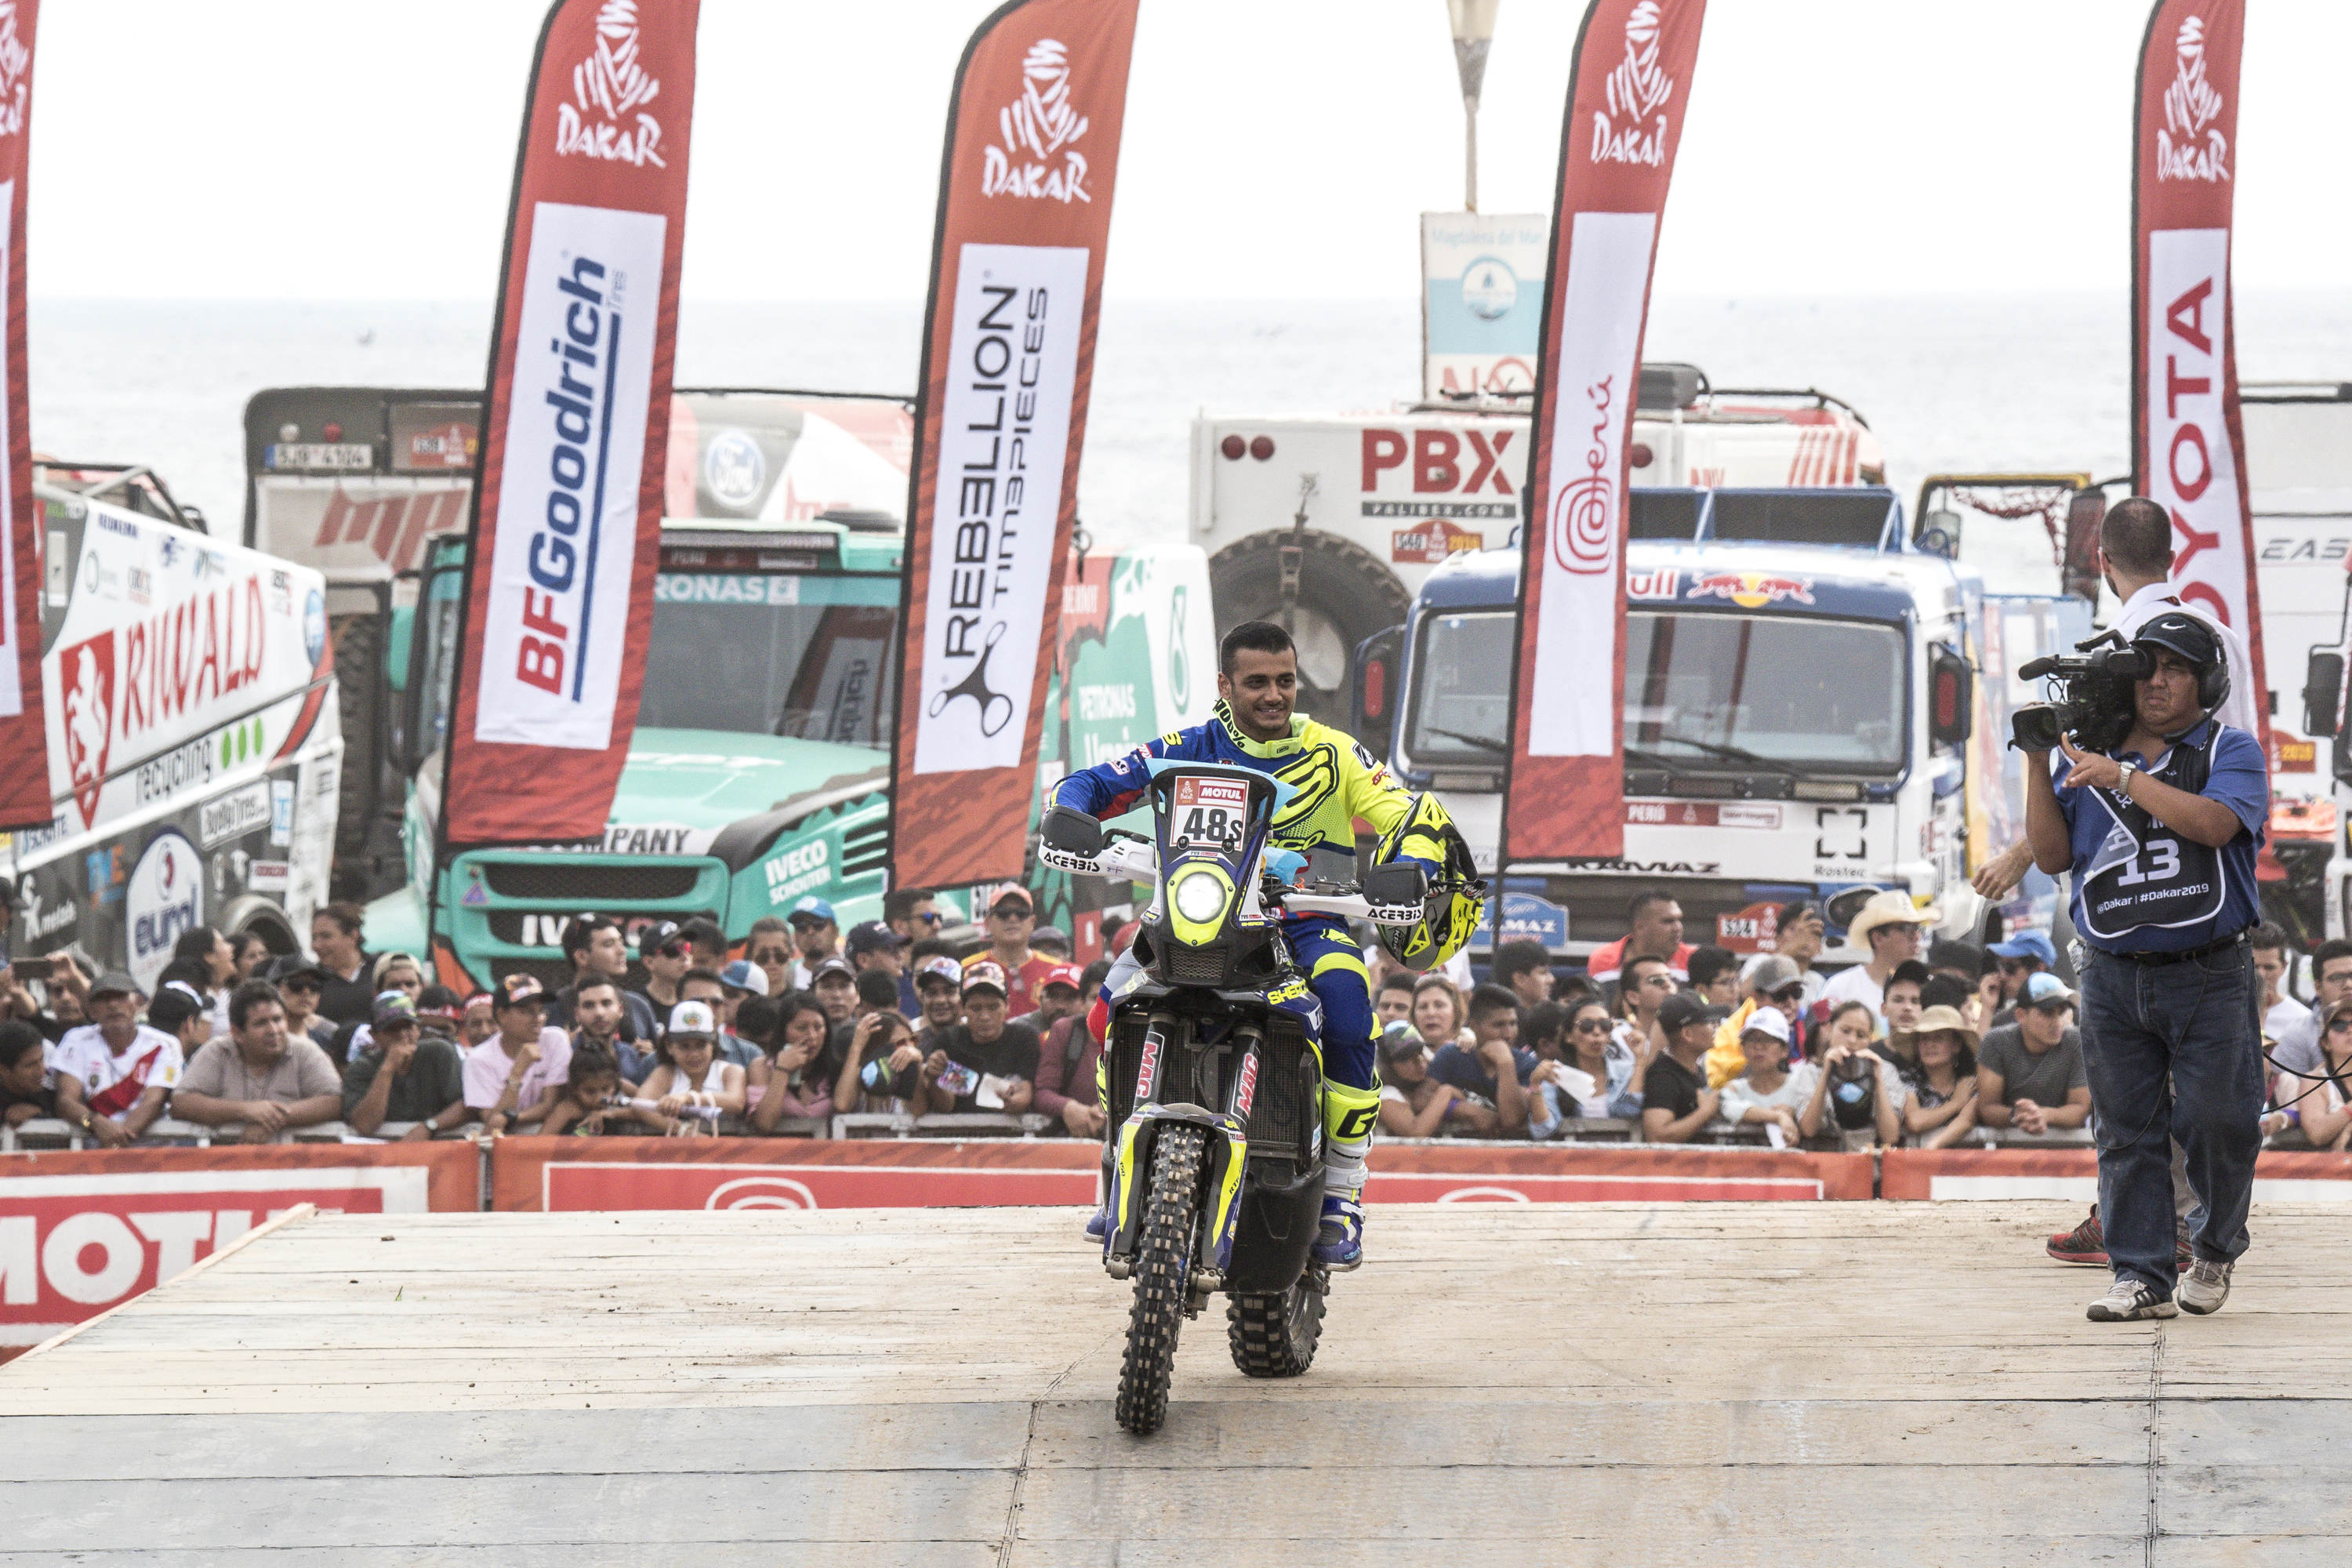 Dakar Rally 2019 Motorcyclediaries